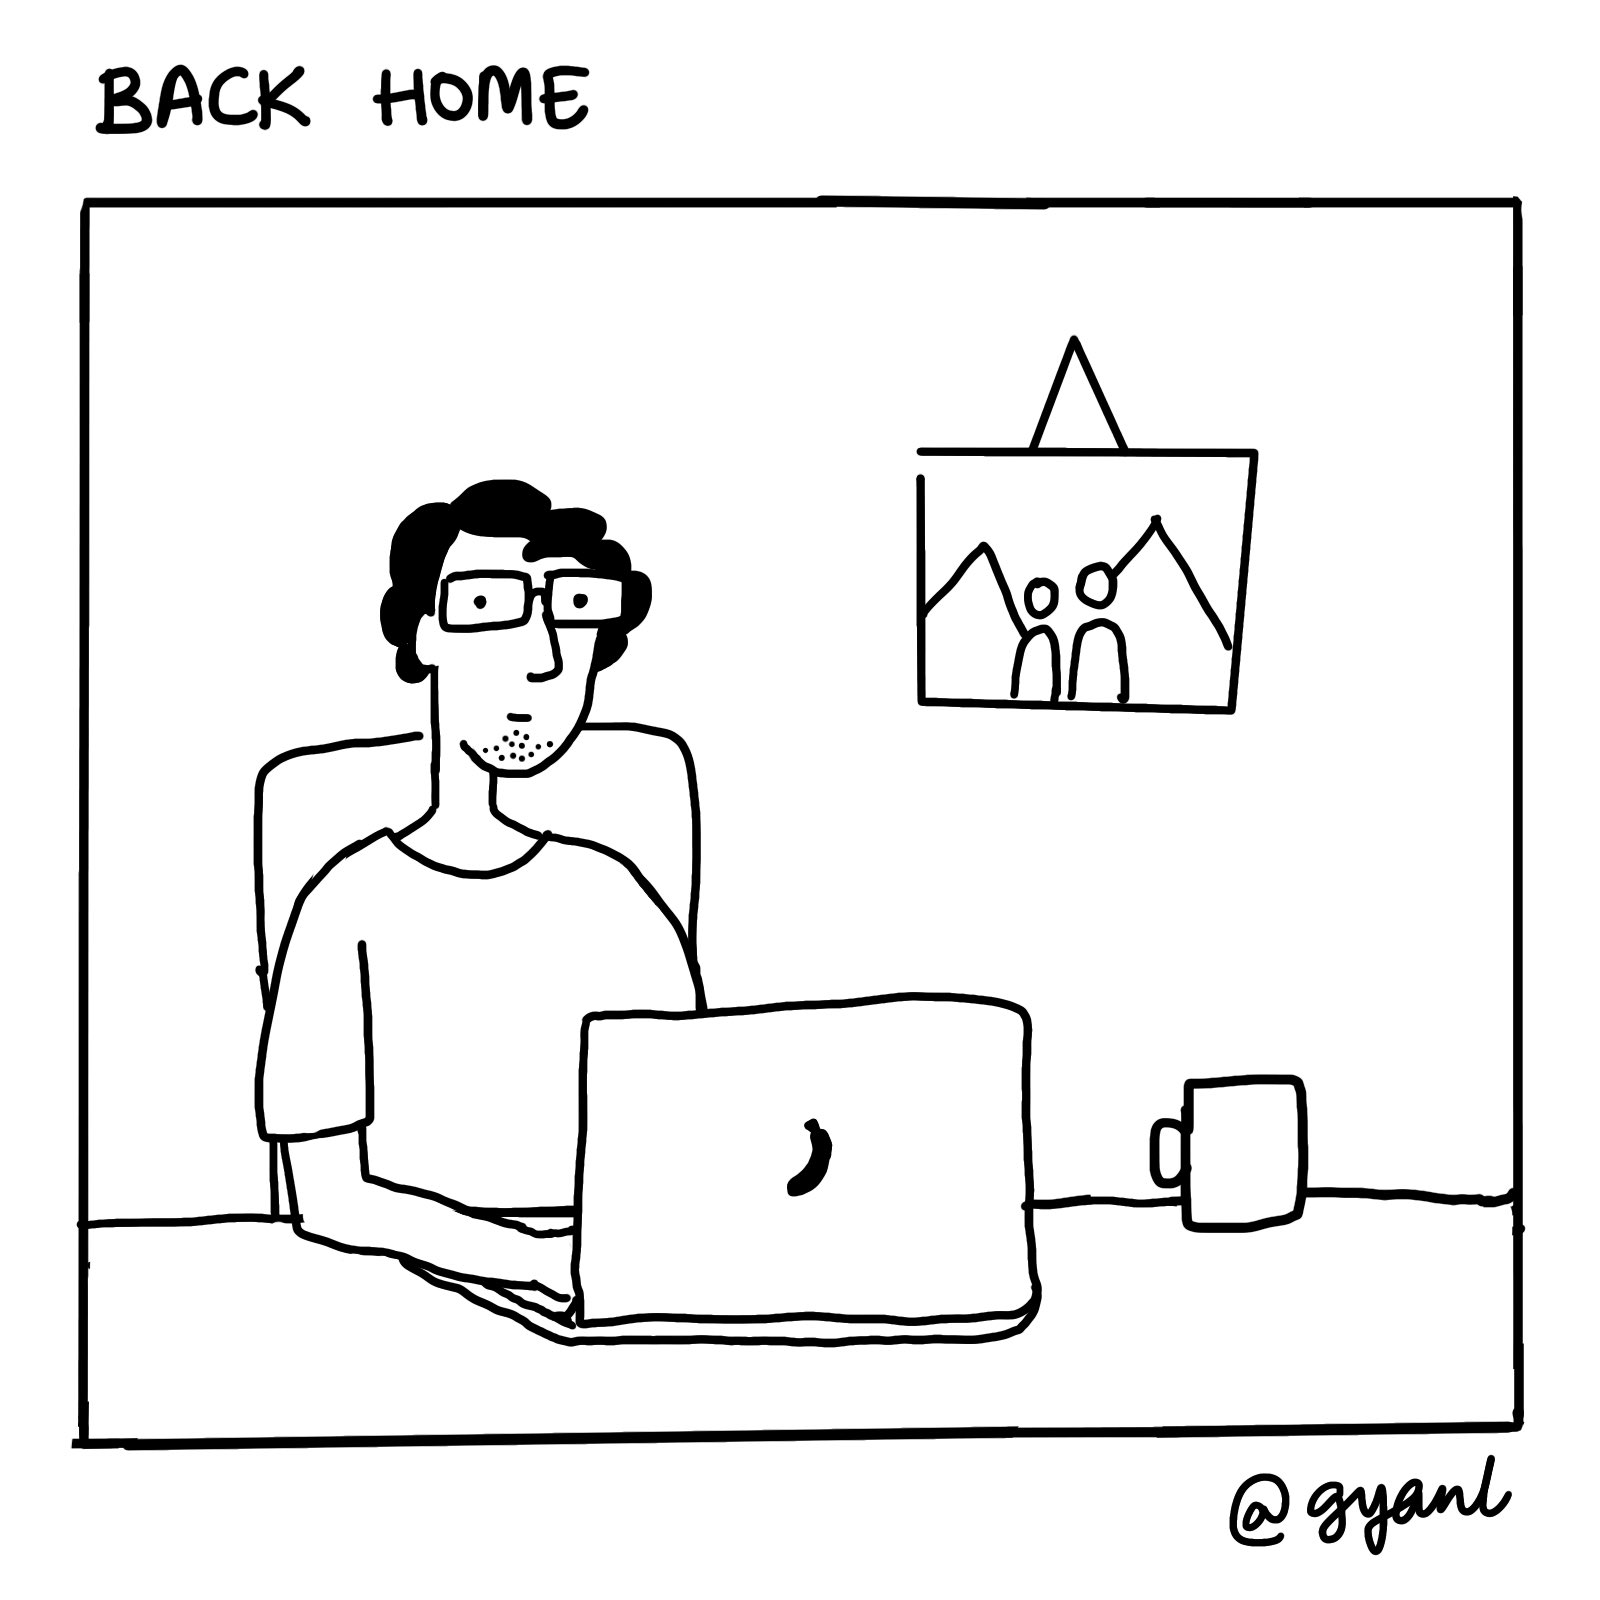 A cartoon I drew on moving home